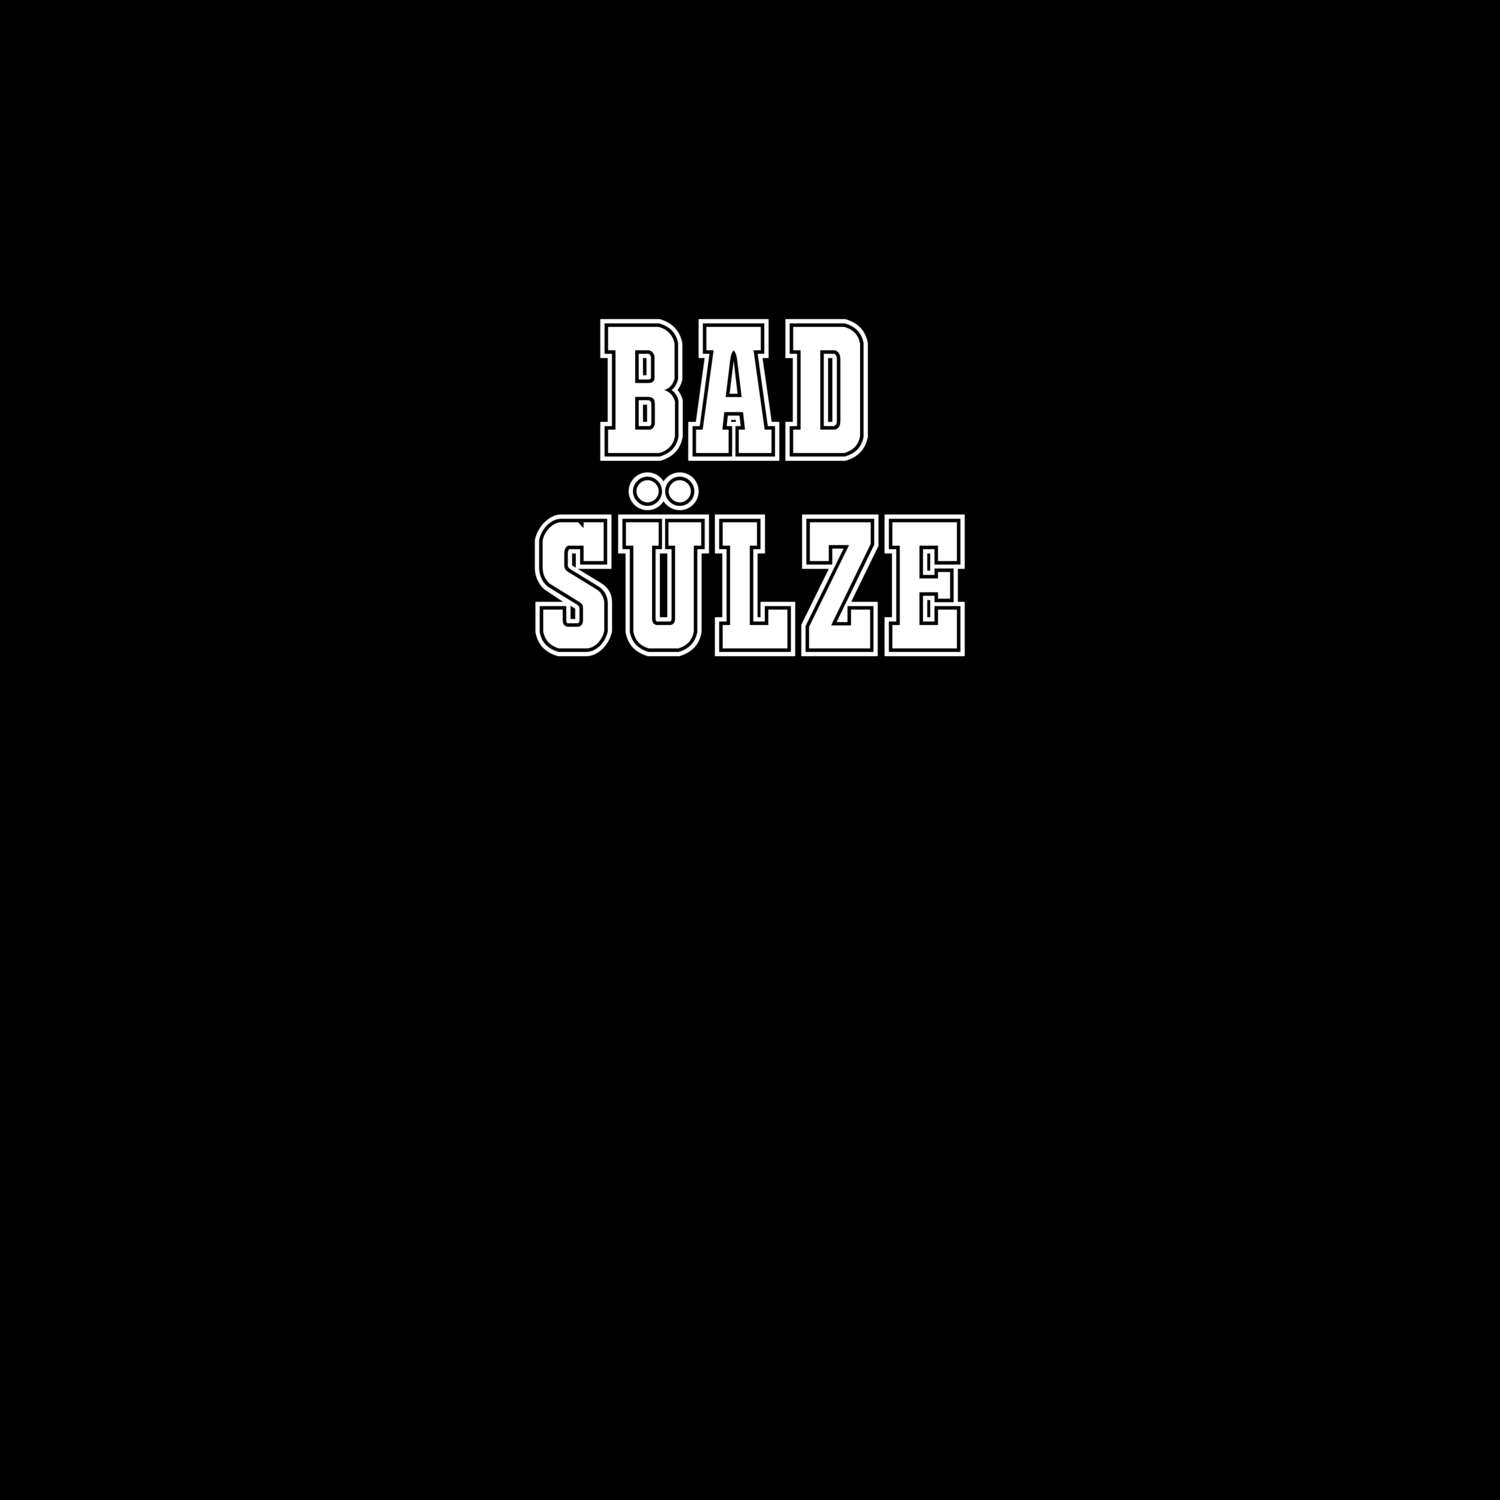 Bad Sülze T-Shirt »Classic«